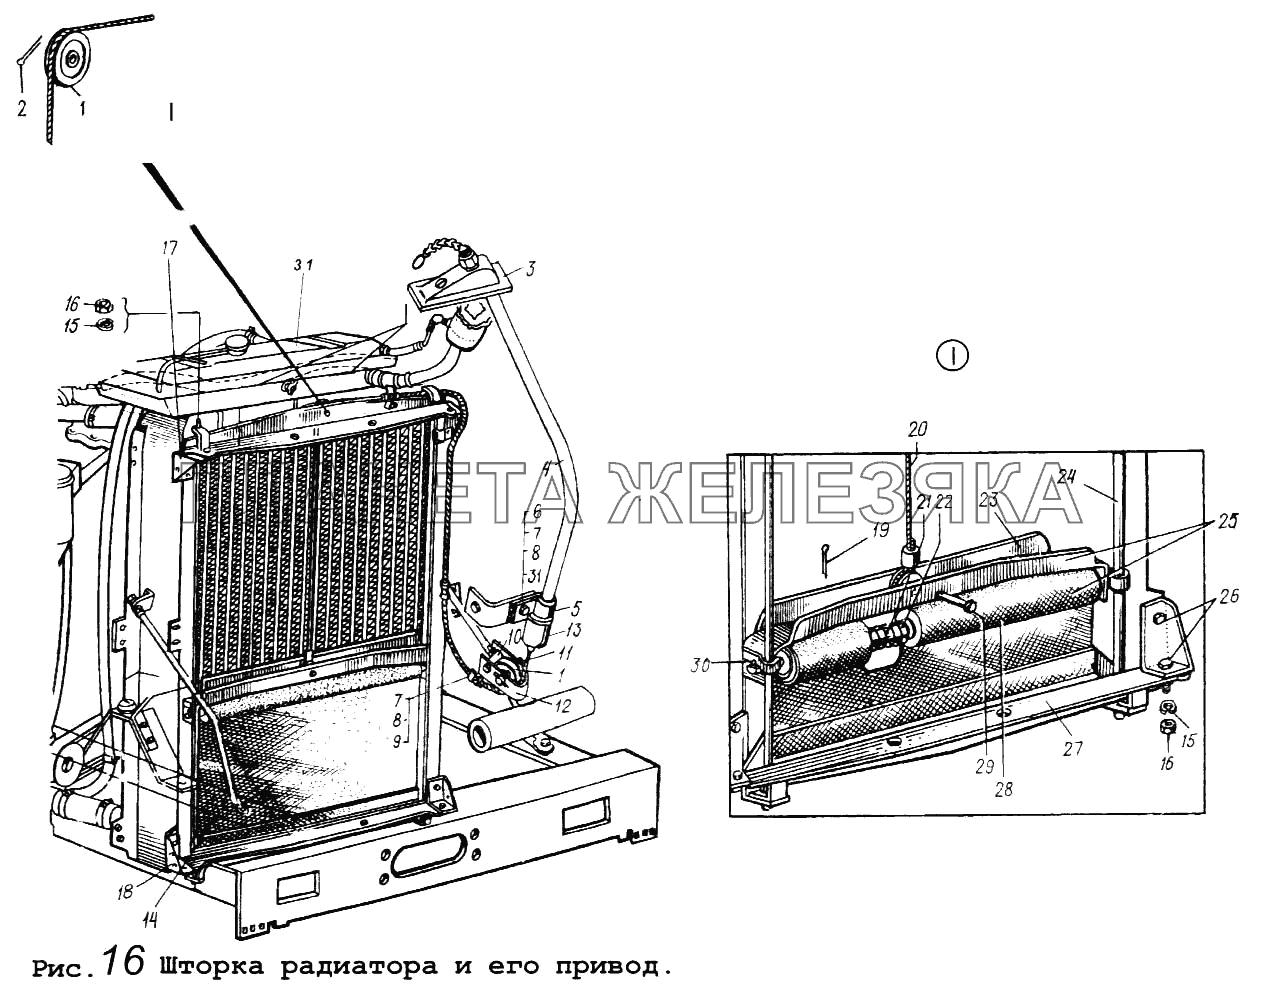 Шторка радиатора и его привод МАЗ-64255